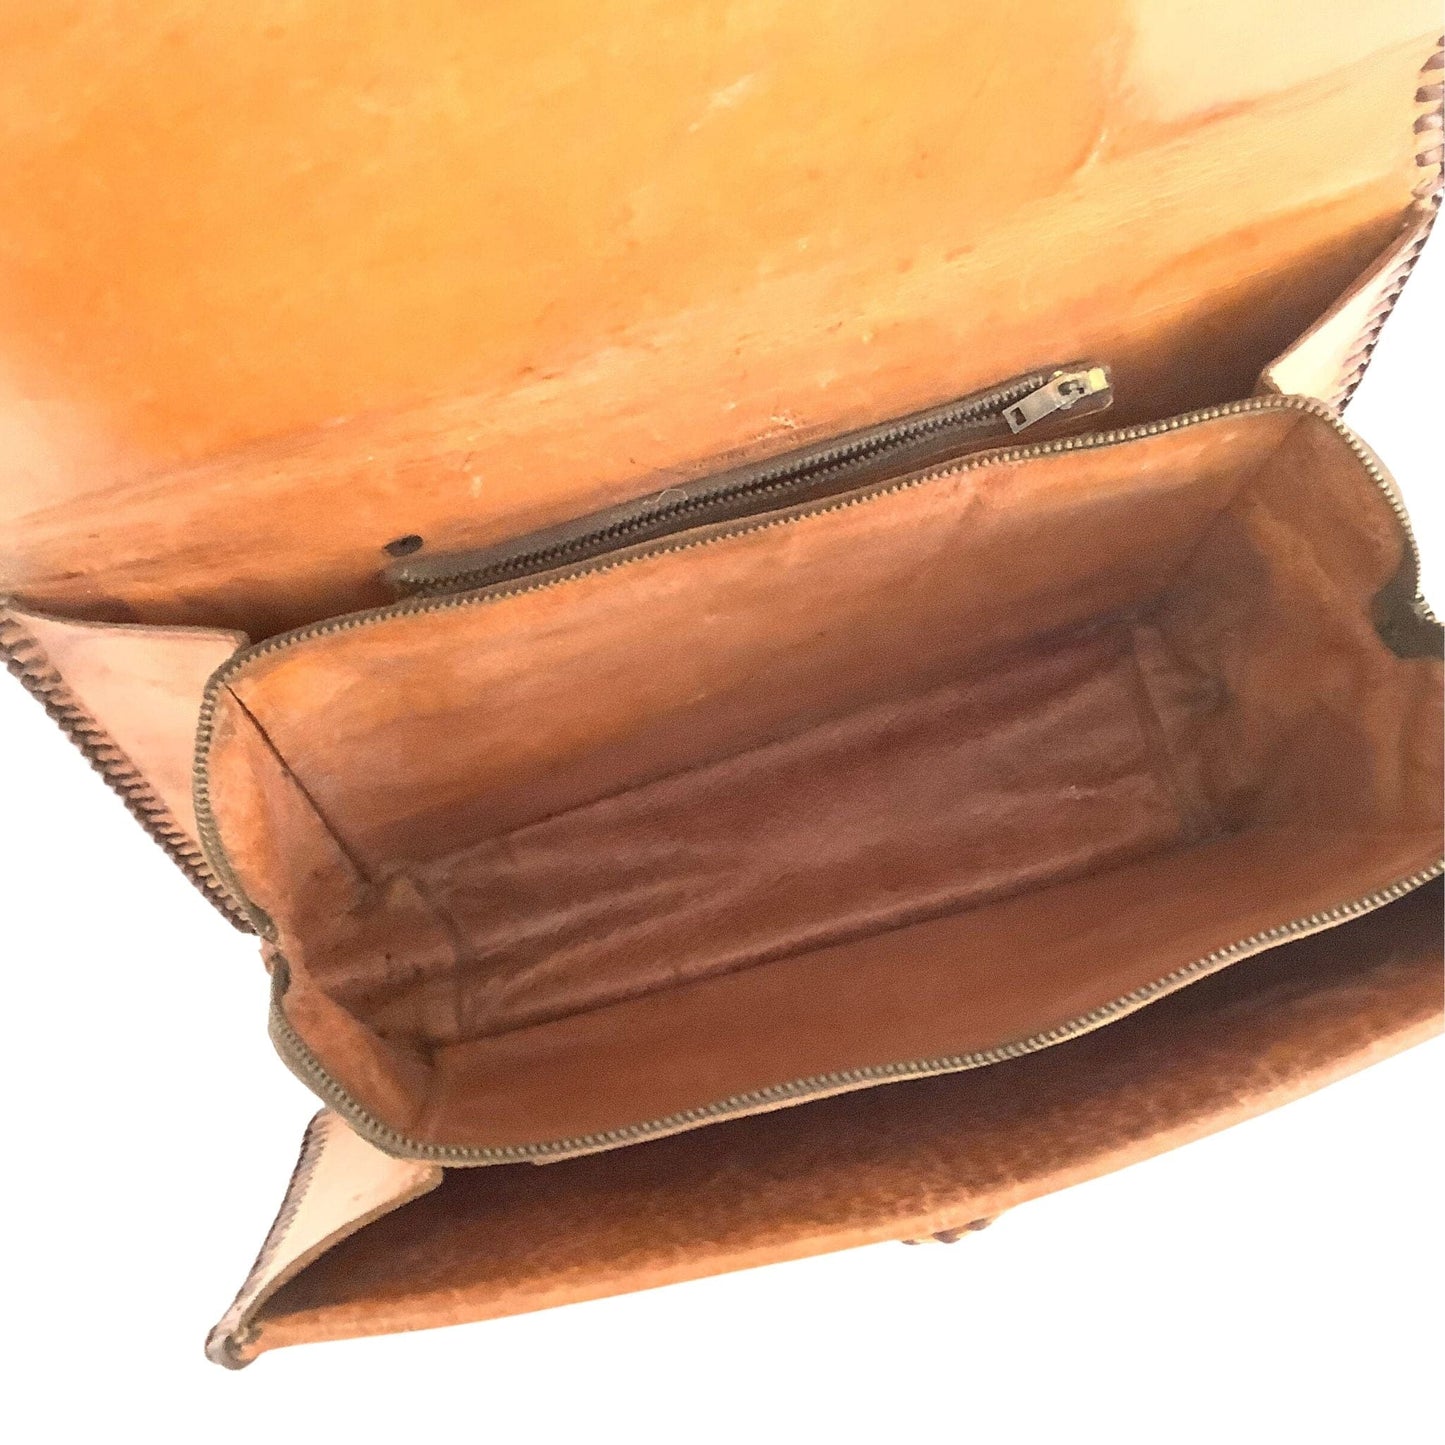 Spanish Revival Clutch Bag Tan / Leather / Vintage 1920s